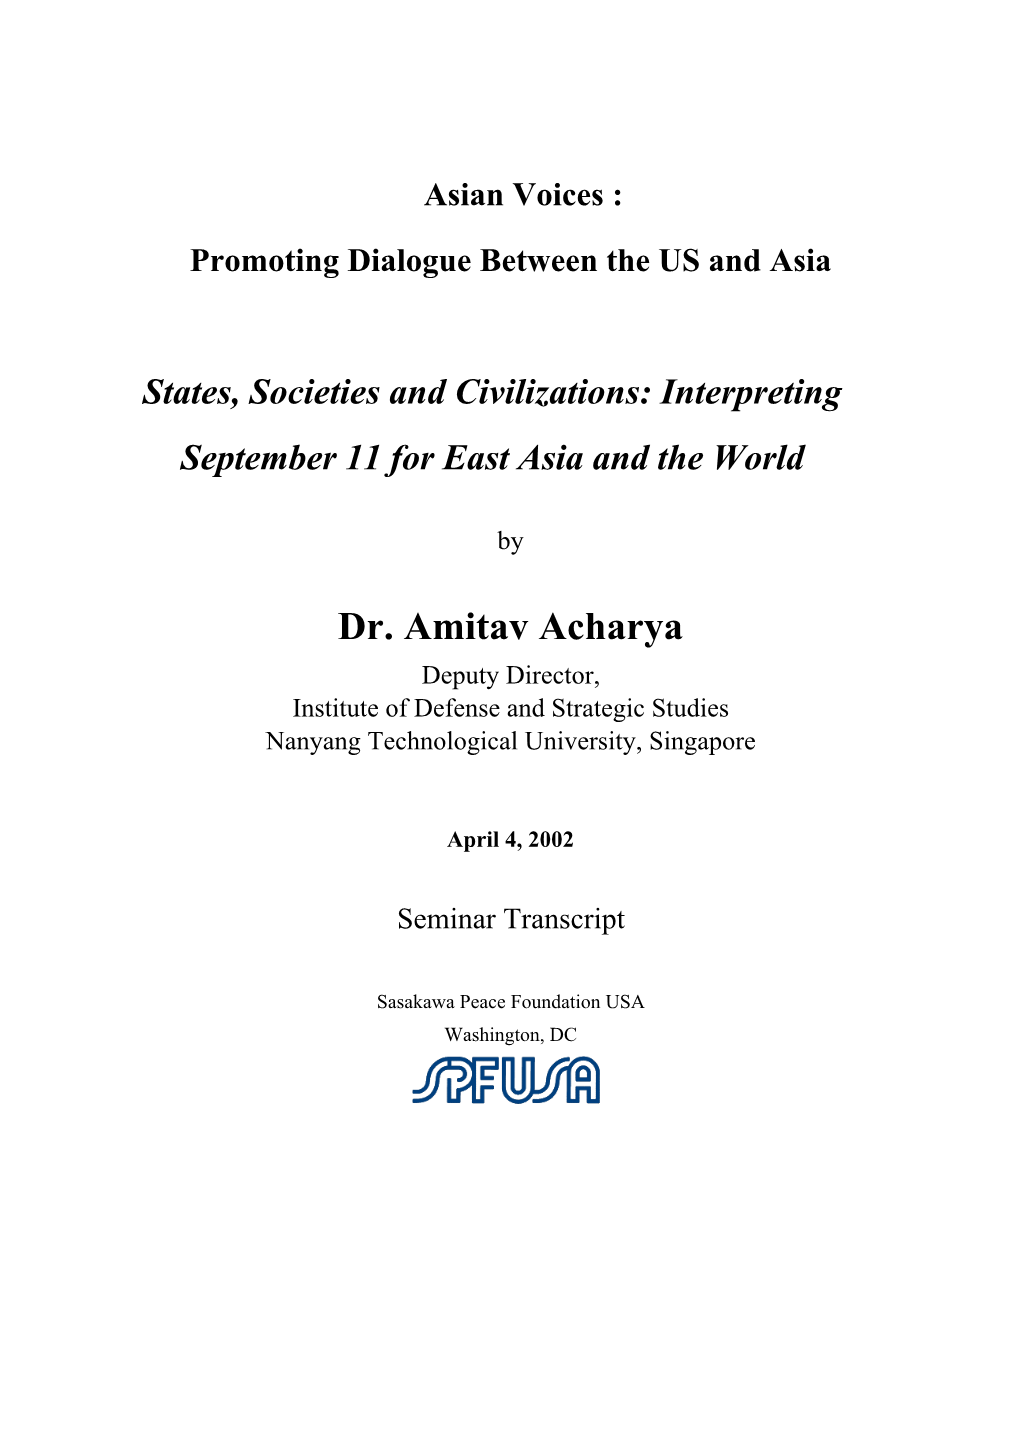 Dr. Amitav Acharya Deputy Director, Institute of Defense and Strategic Studies Nanyang Technological University, Singapore